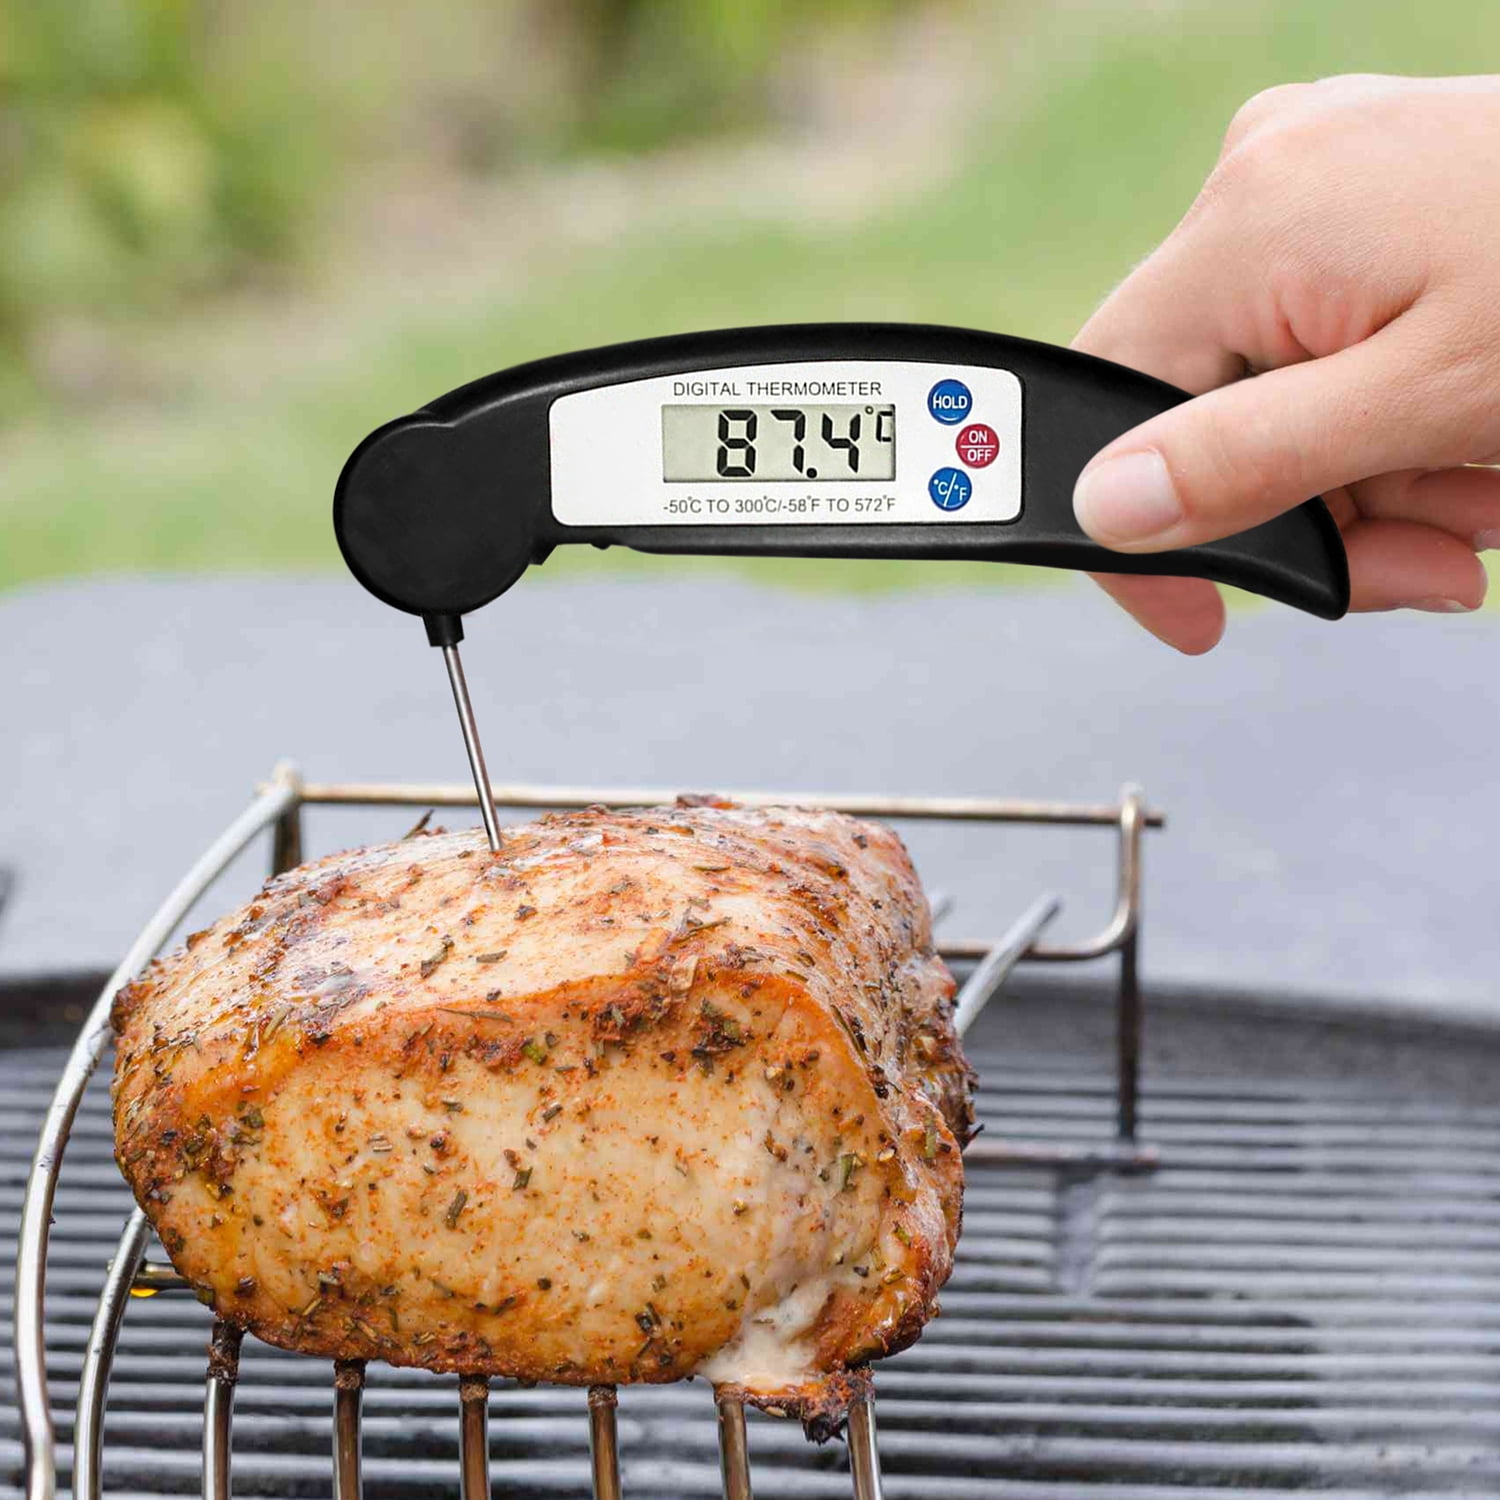 Illuminlabs Meat Thermometer - Instant Read Digital Food